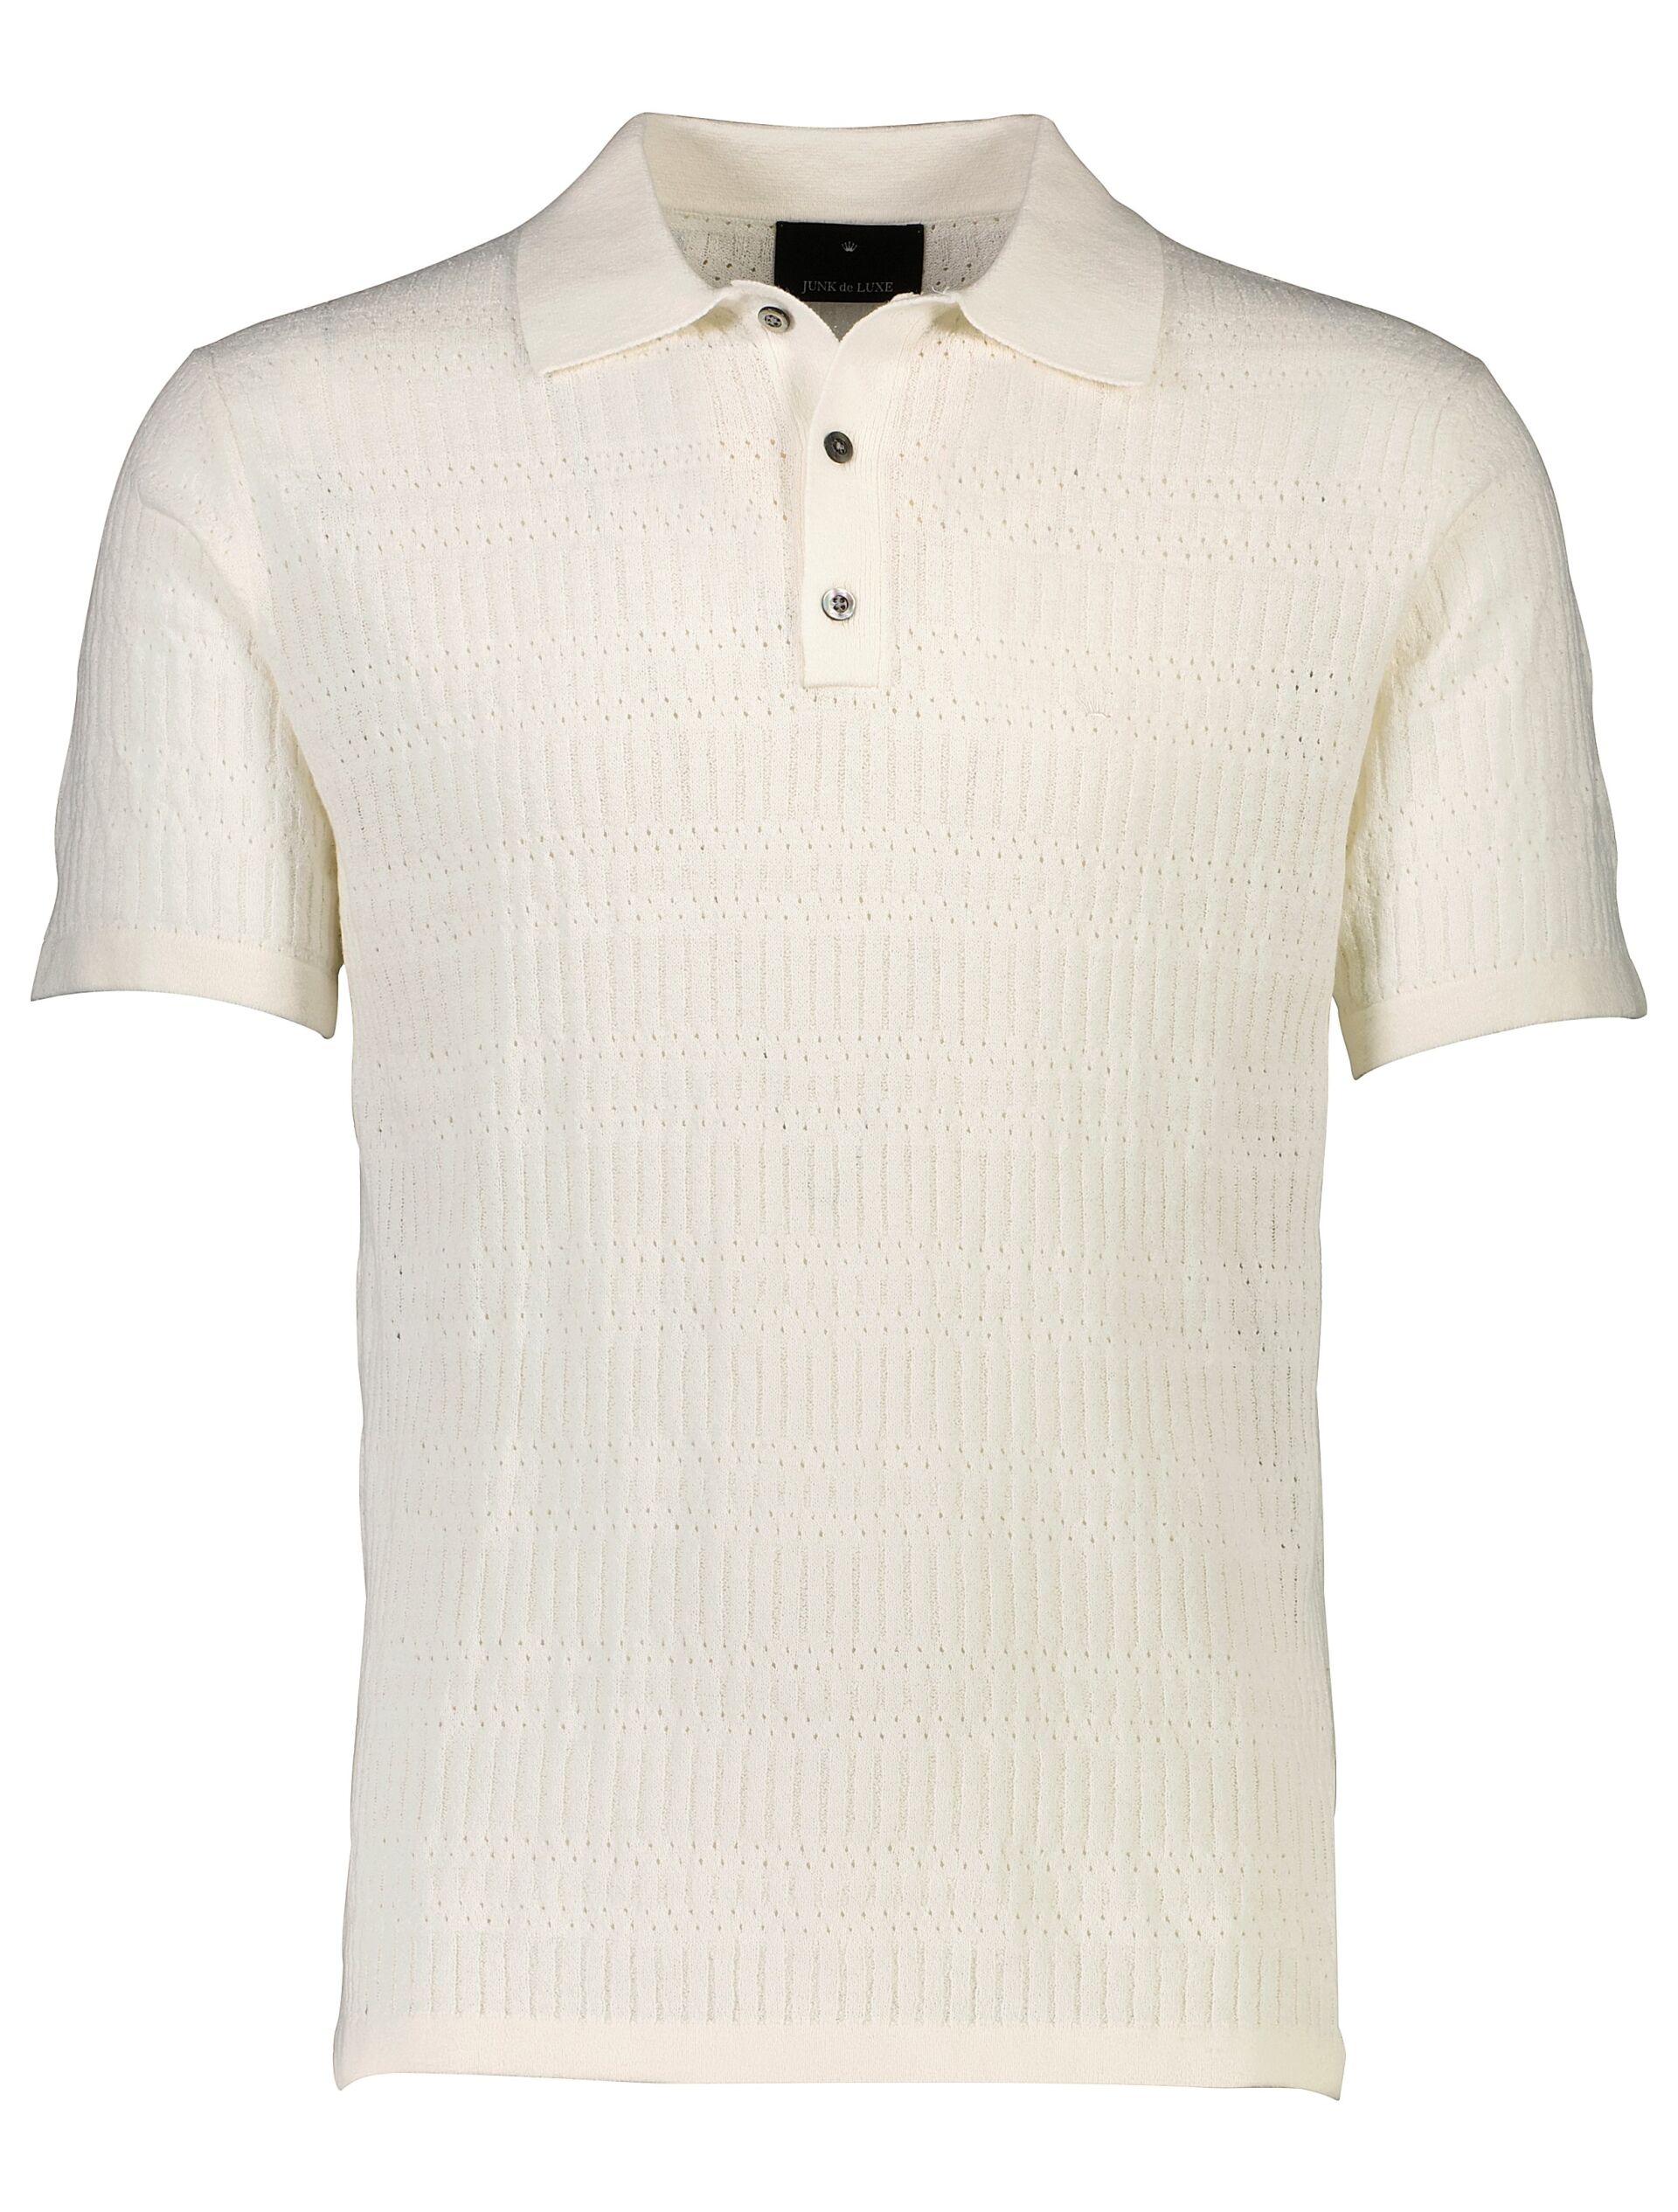 Polo shirt Polo shirt White 60-822013